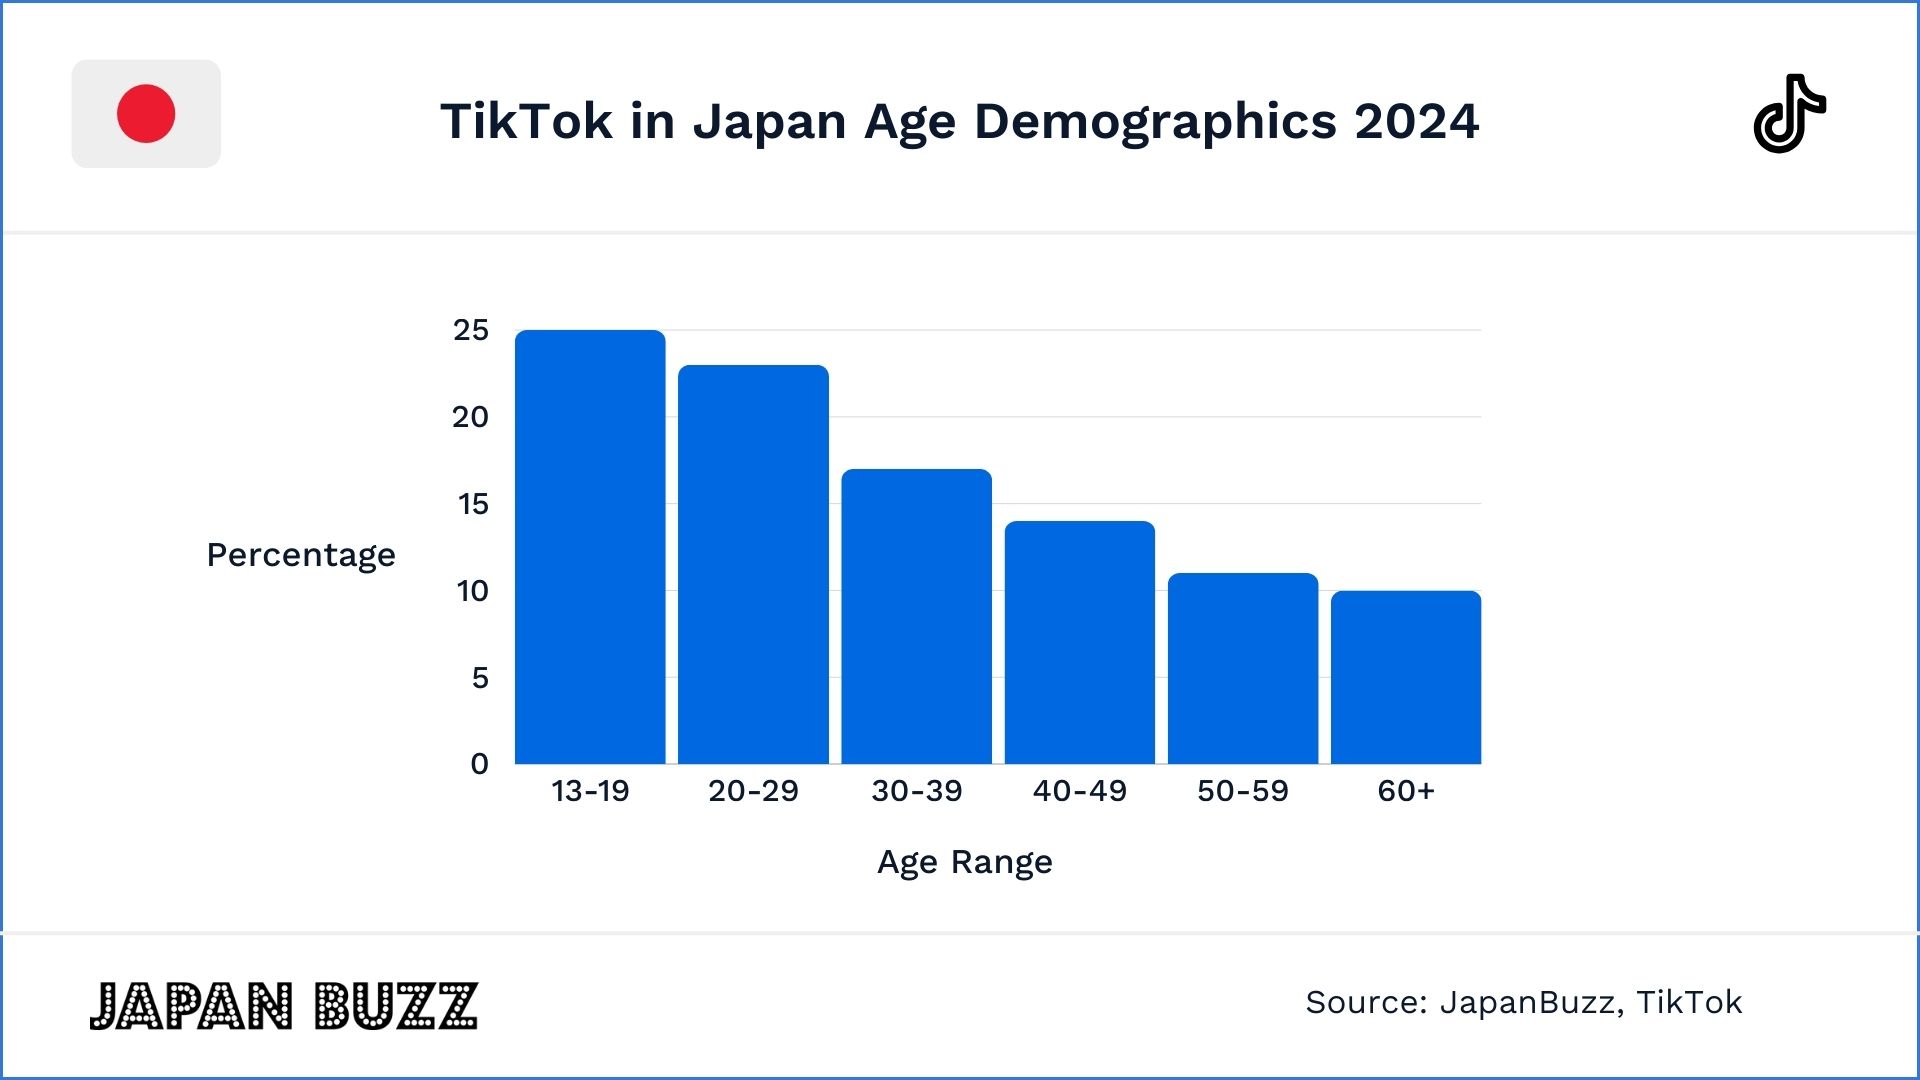 TikTok in Japan Age Demographics 2024